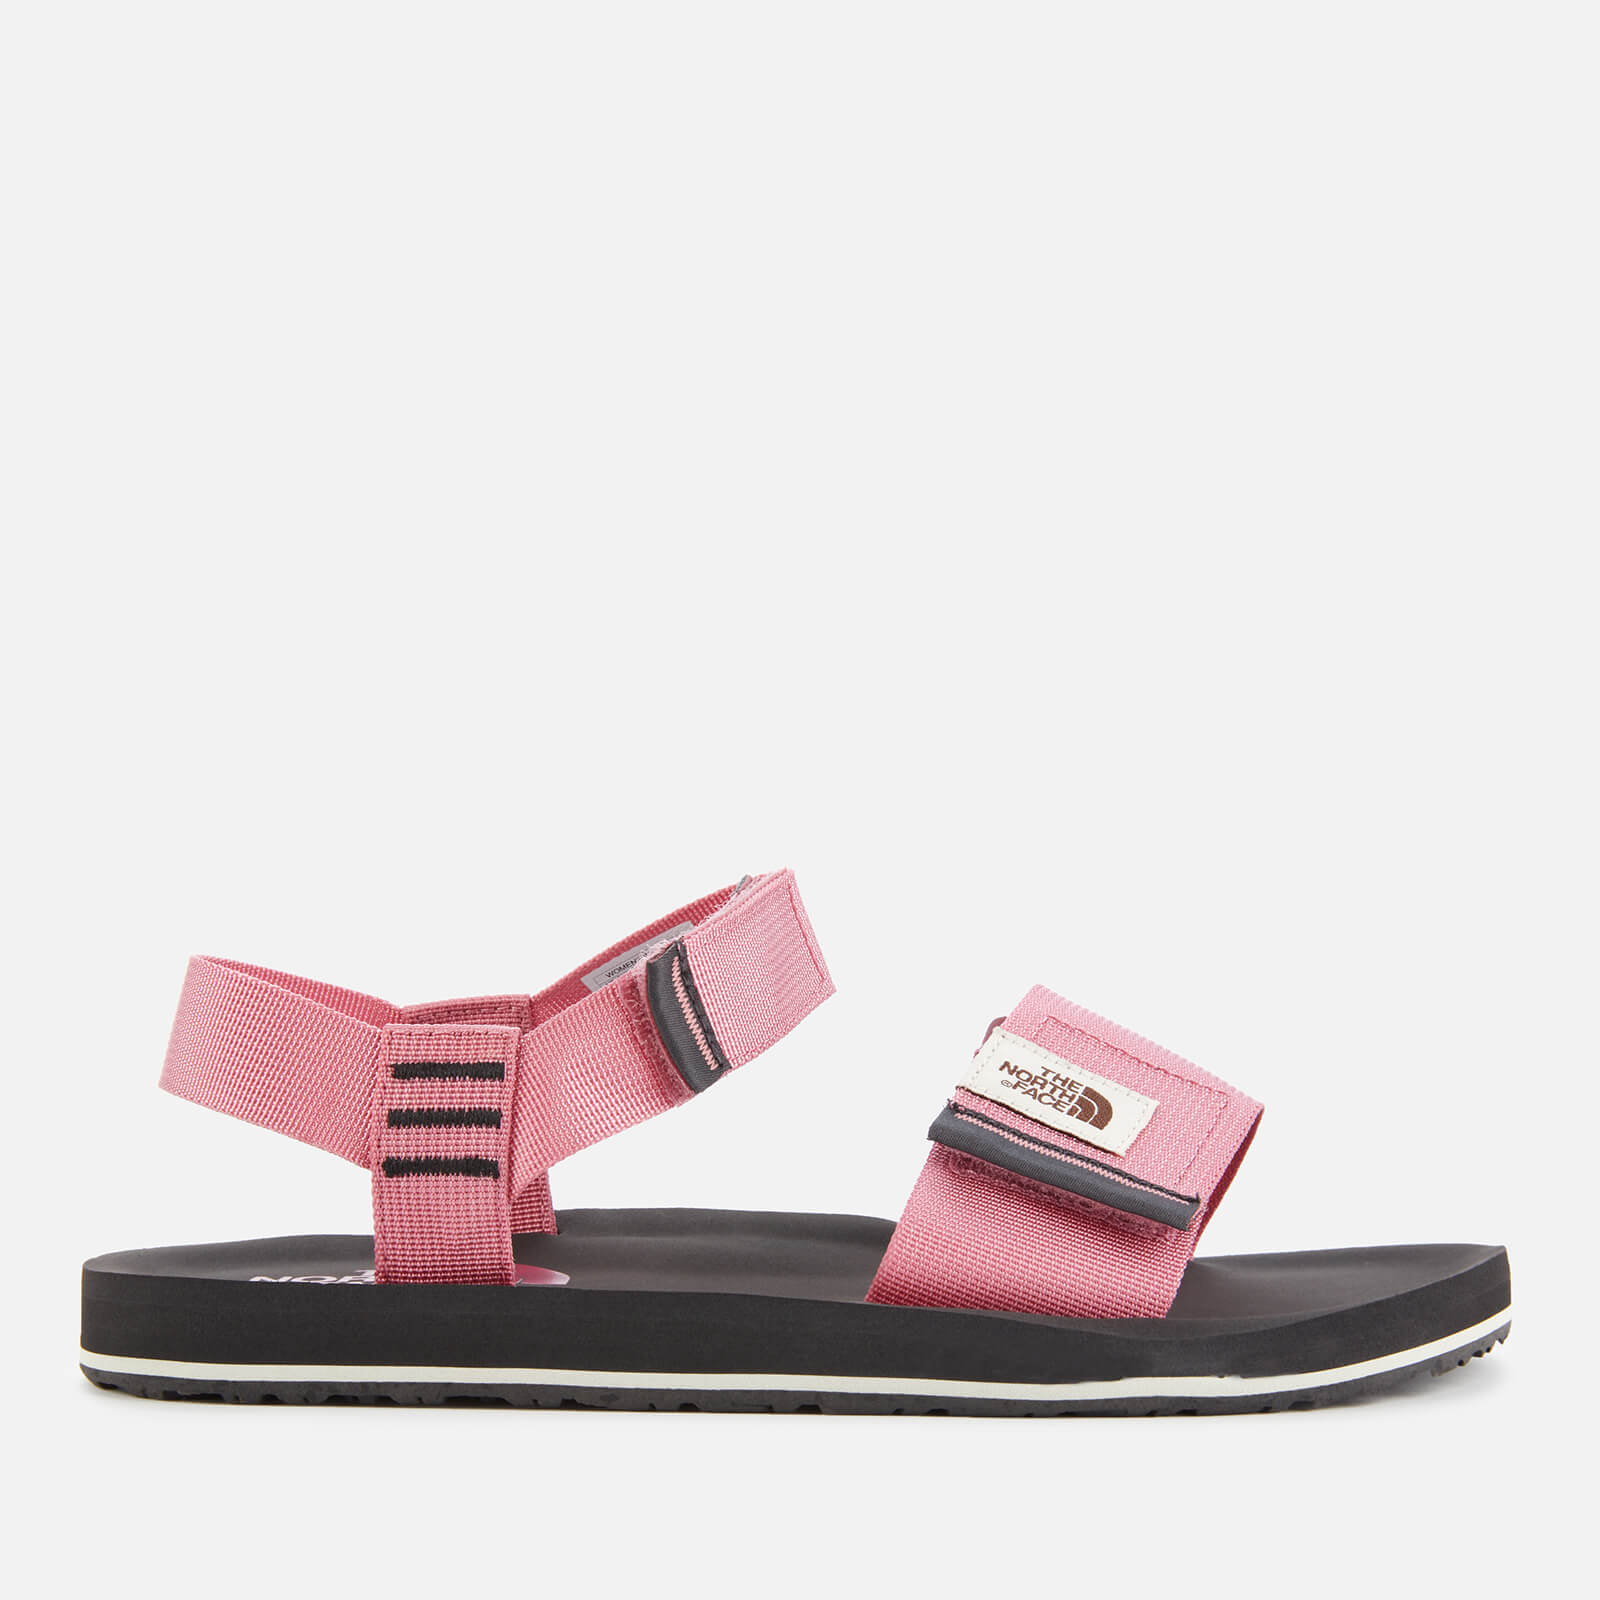 The North Face Women's Skeena Sandals - Black/Pink - UK 8